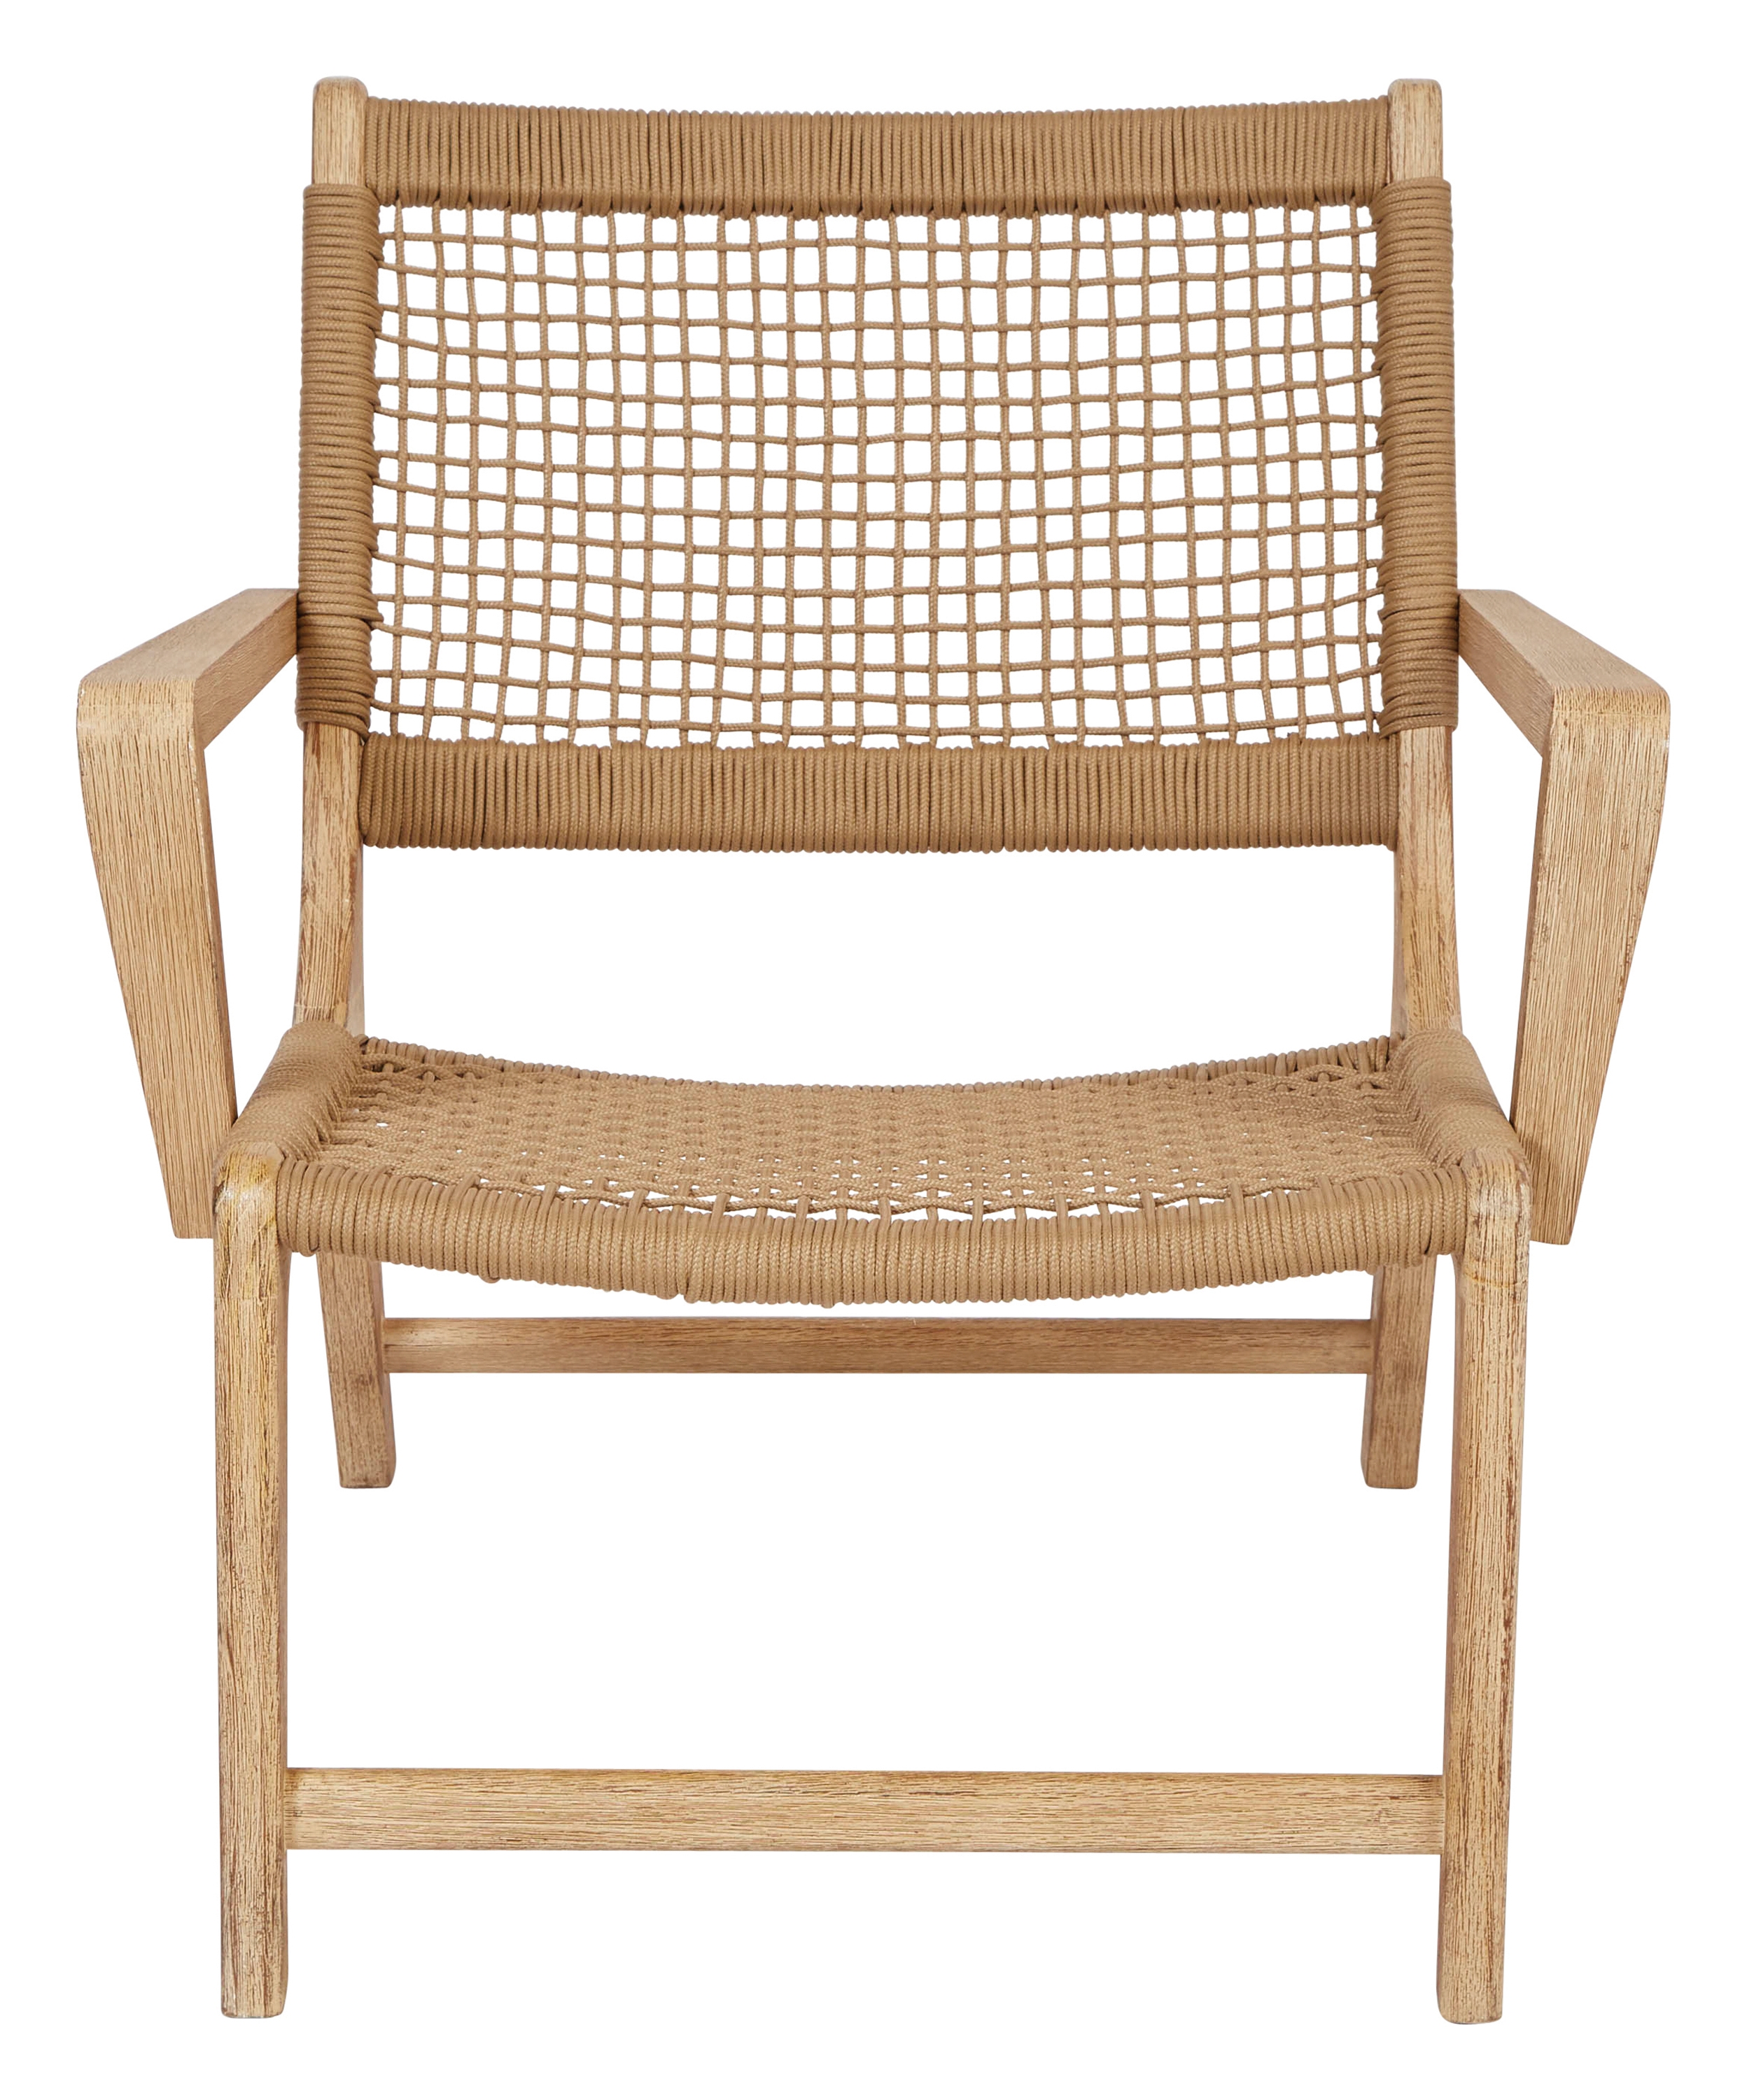 Dillon Chair - Image 1